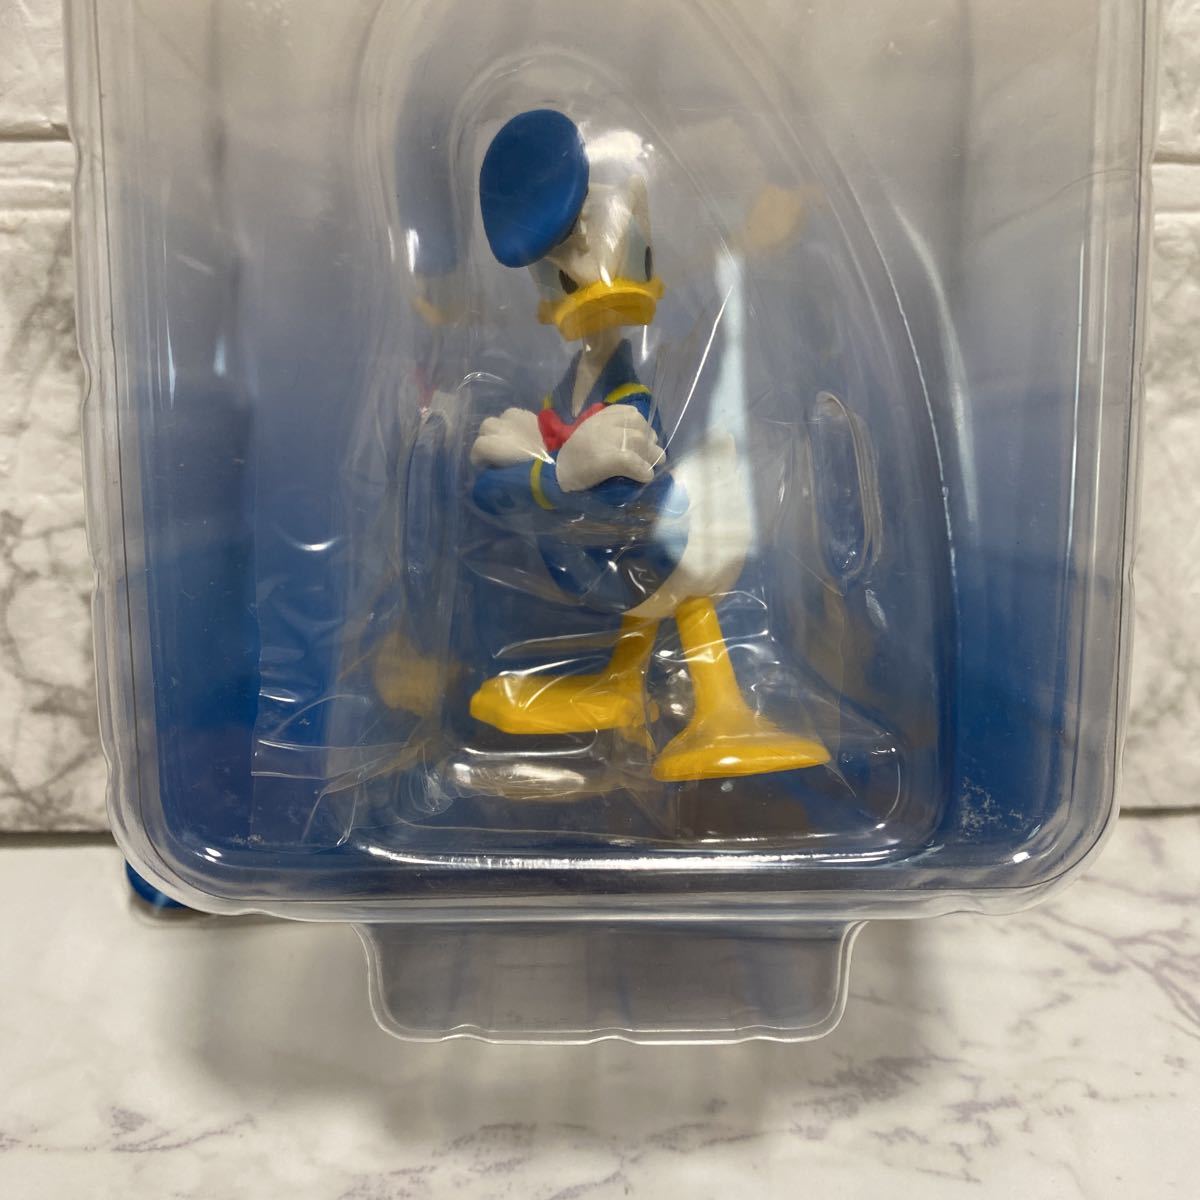  unopened goods meti com toy Donald Duck DONALD DUCK NEW STYLE Donald figure Ultra digital figure Disney 